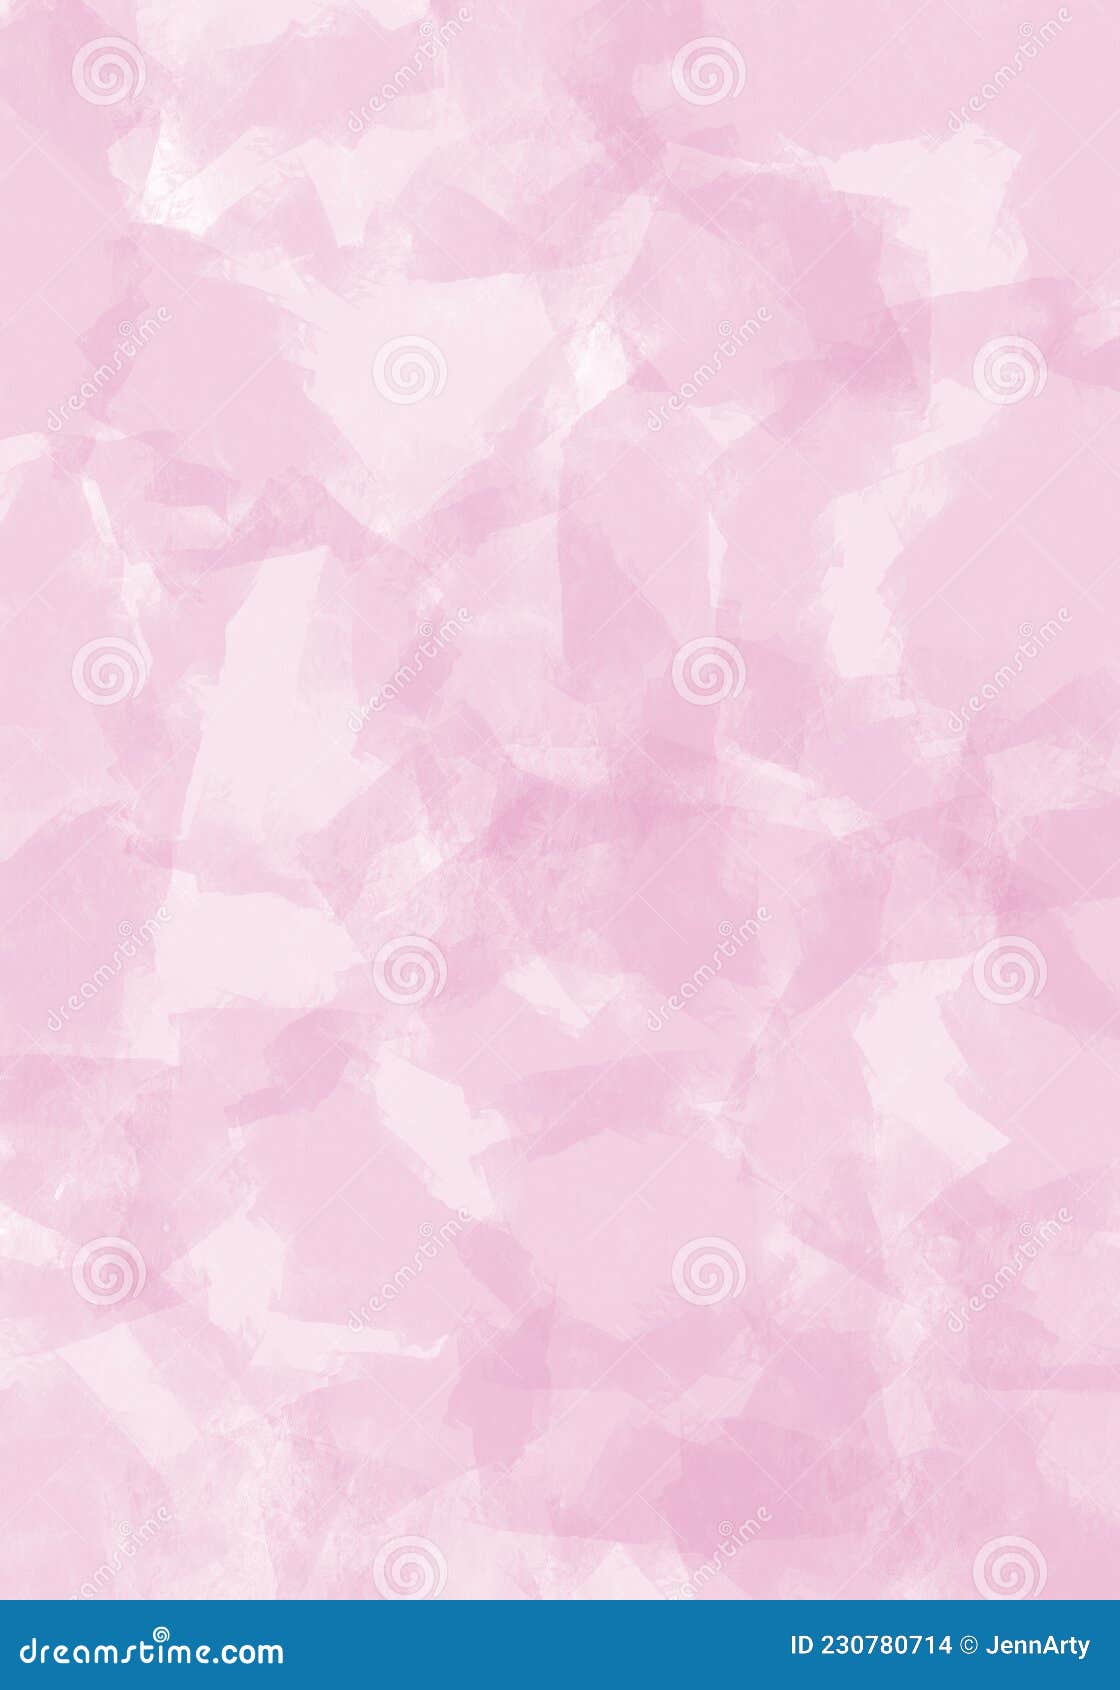 Pink Cracked Grunge Wall Background Stock Illustration - Illustration ...